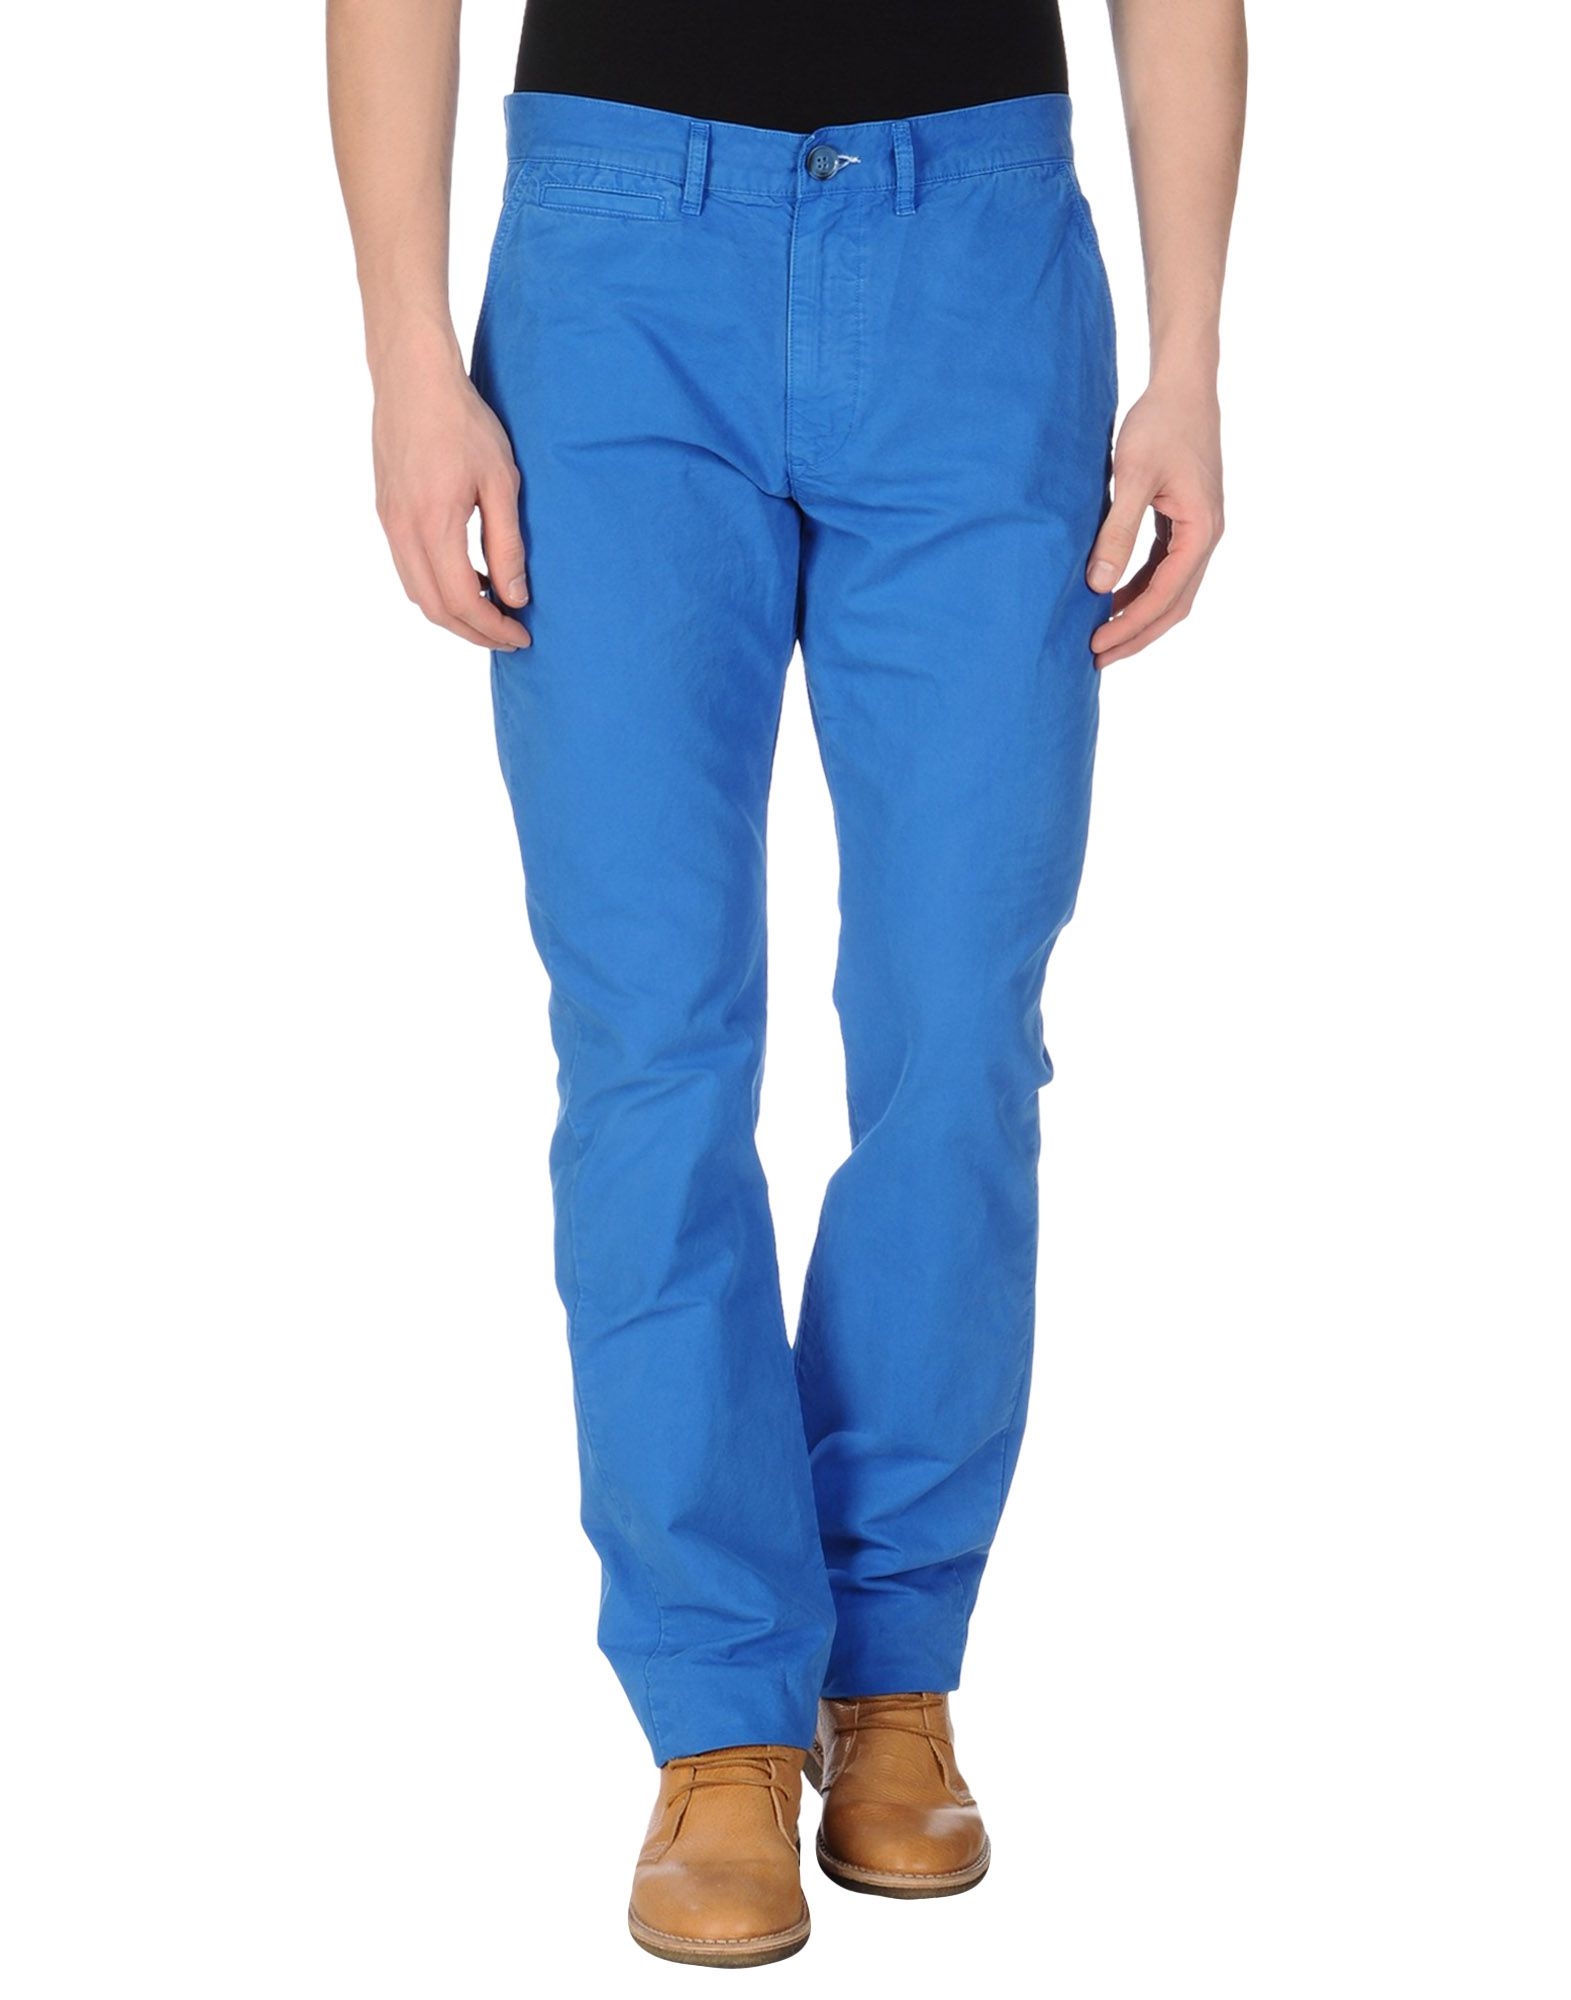 Lyst - Jean.Machine Casual Trouser in Blue for Men